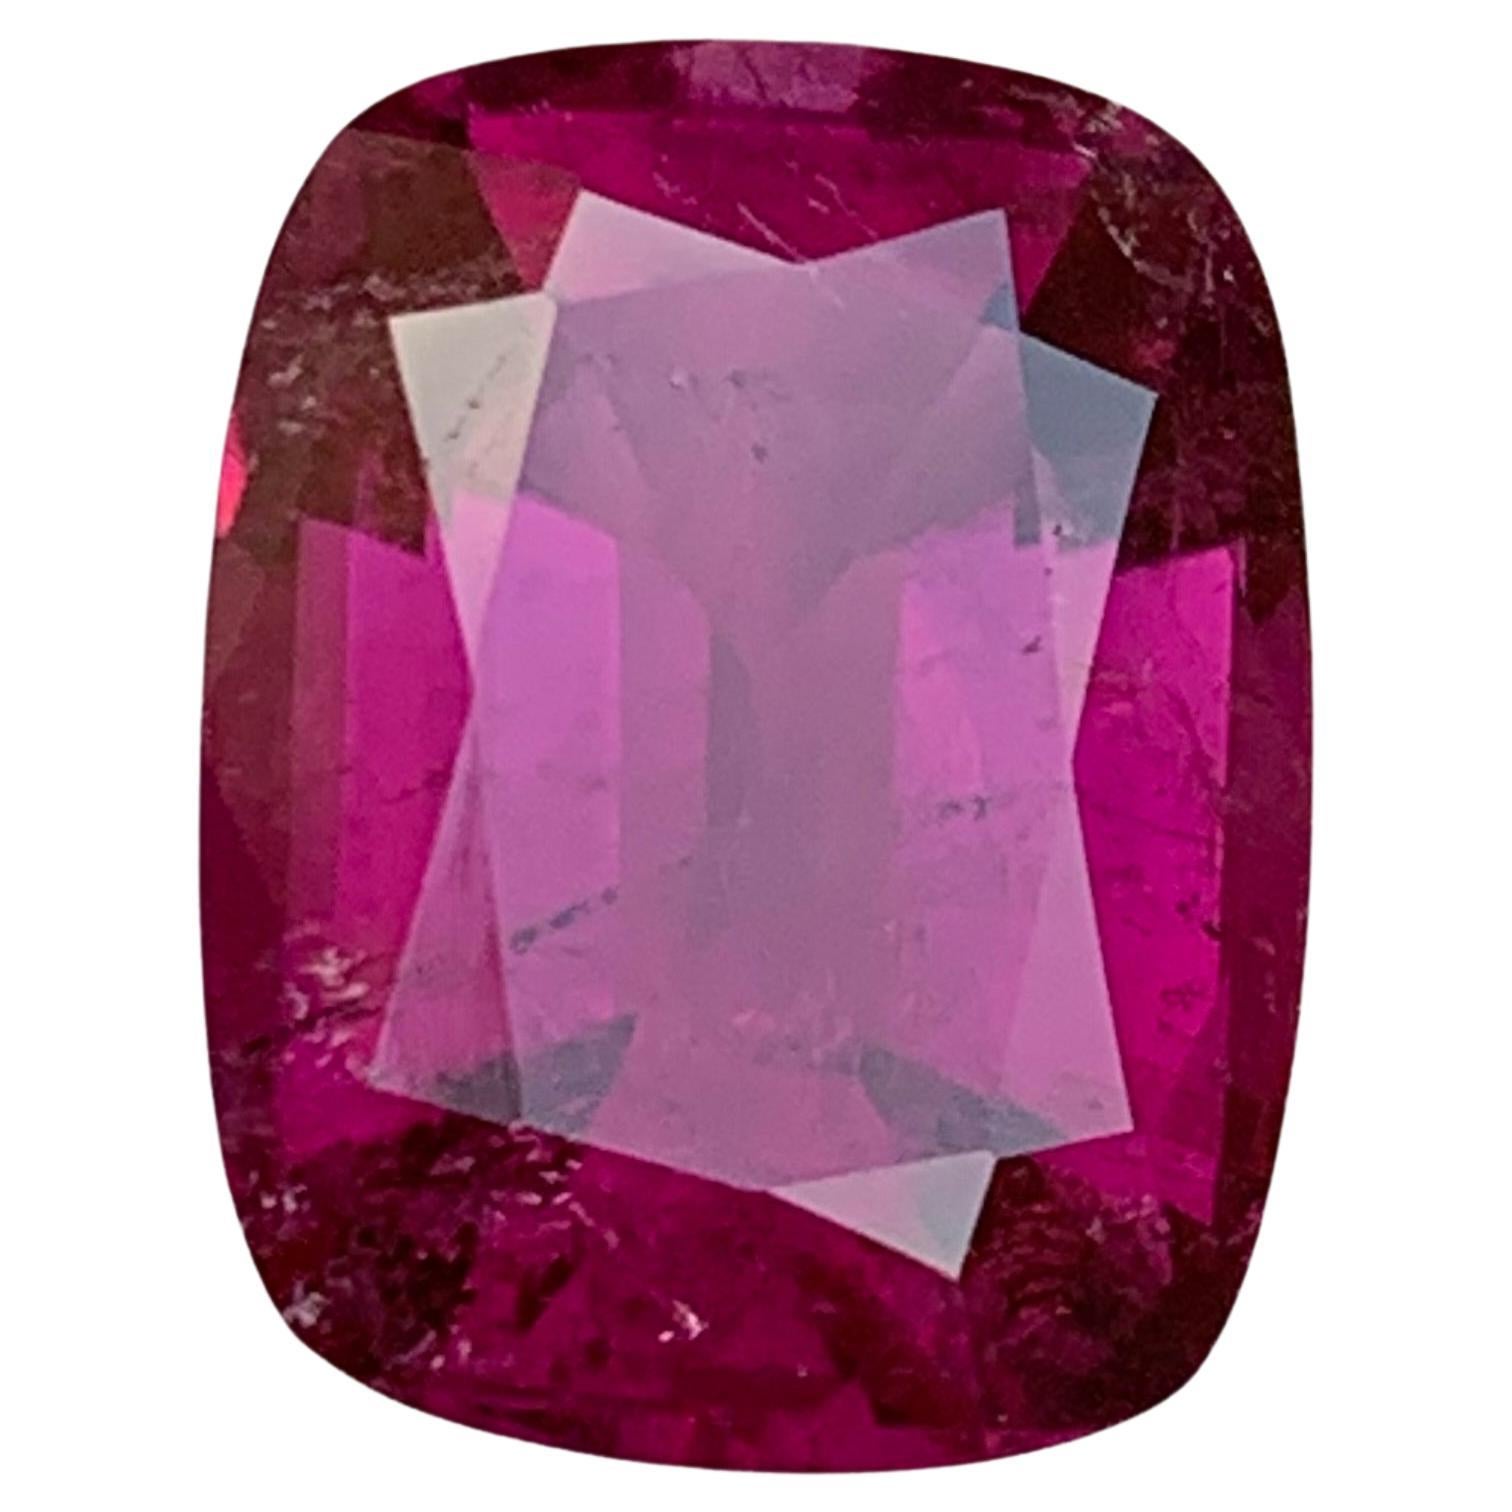 Rare Purplish Pink Natural Rubellite Tourmaline Gemstone, 13.45 Ct Cushion Cut For Sale